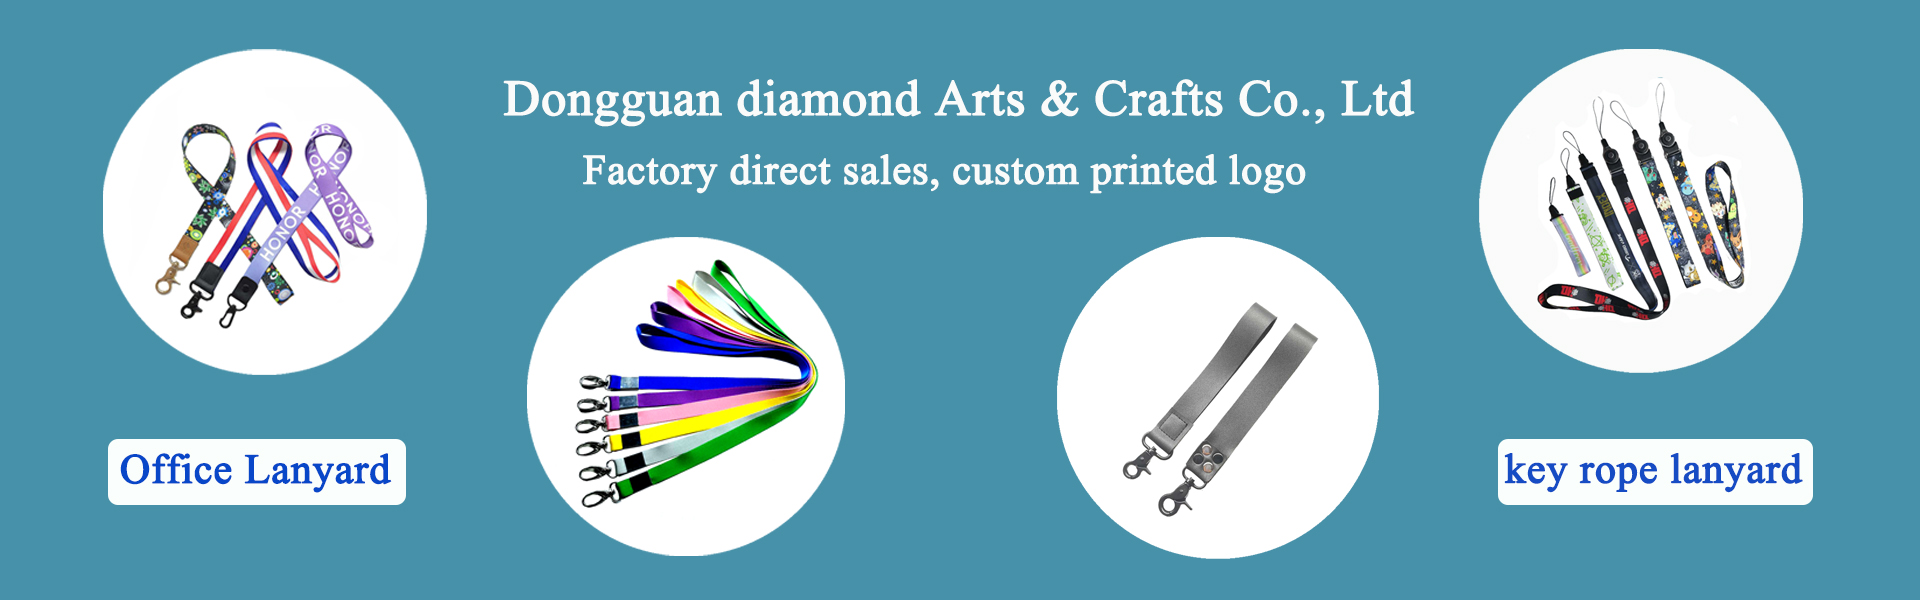 Lanços, acessórios de vestuário,,Dongguan diamond Arts & Crafts Co., Ltd